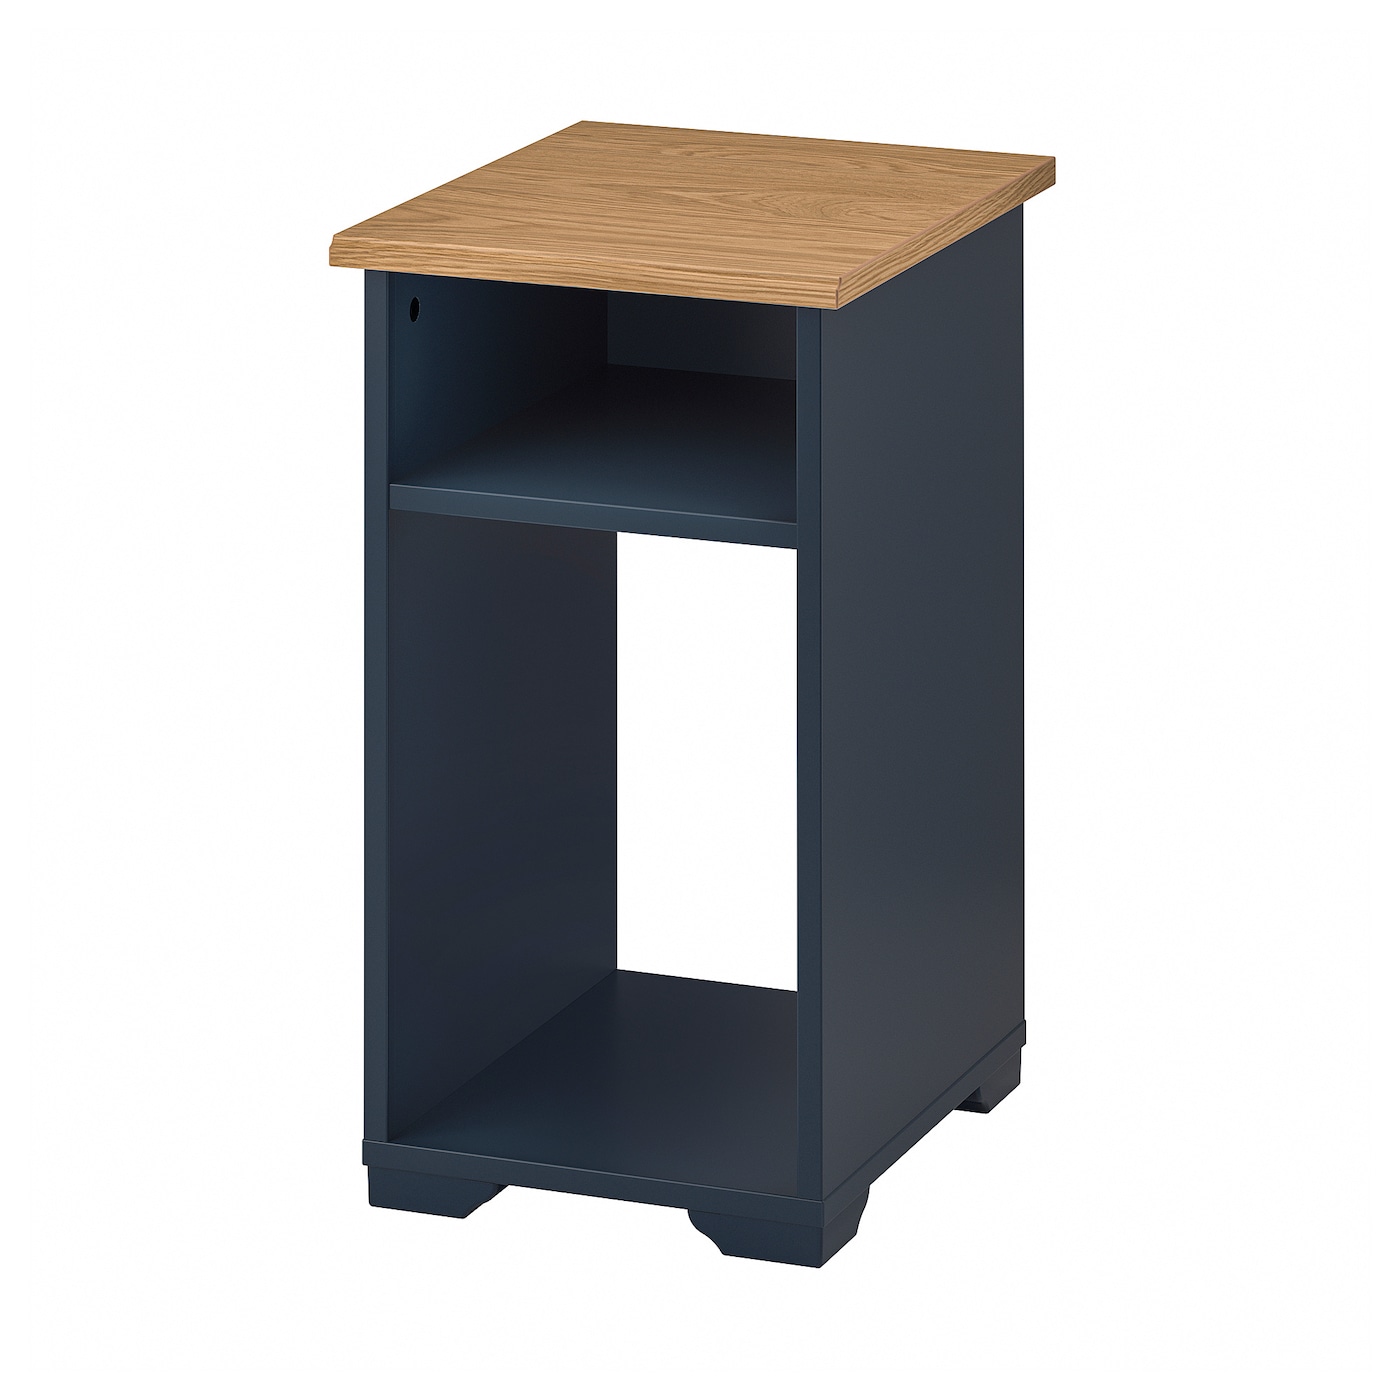 Столик придиванный - IKEA SKRUVBY/ СКРУБВИ ИКЕА, 58х40х32 см, синий/коричневый